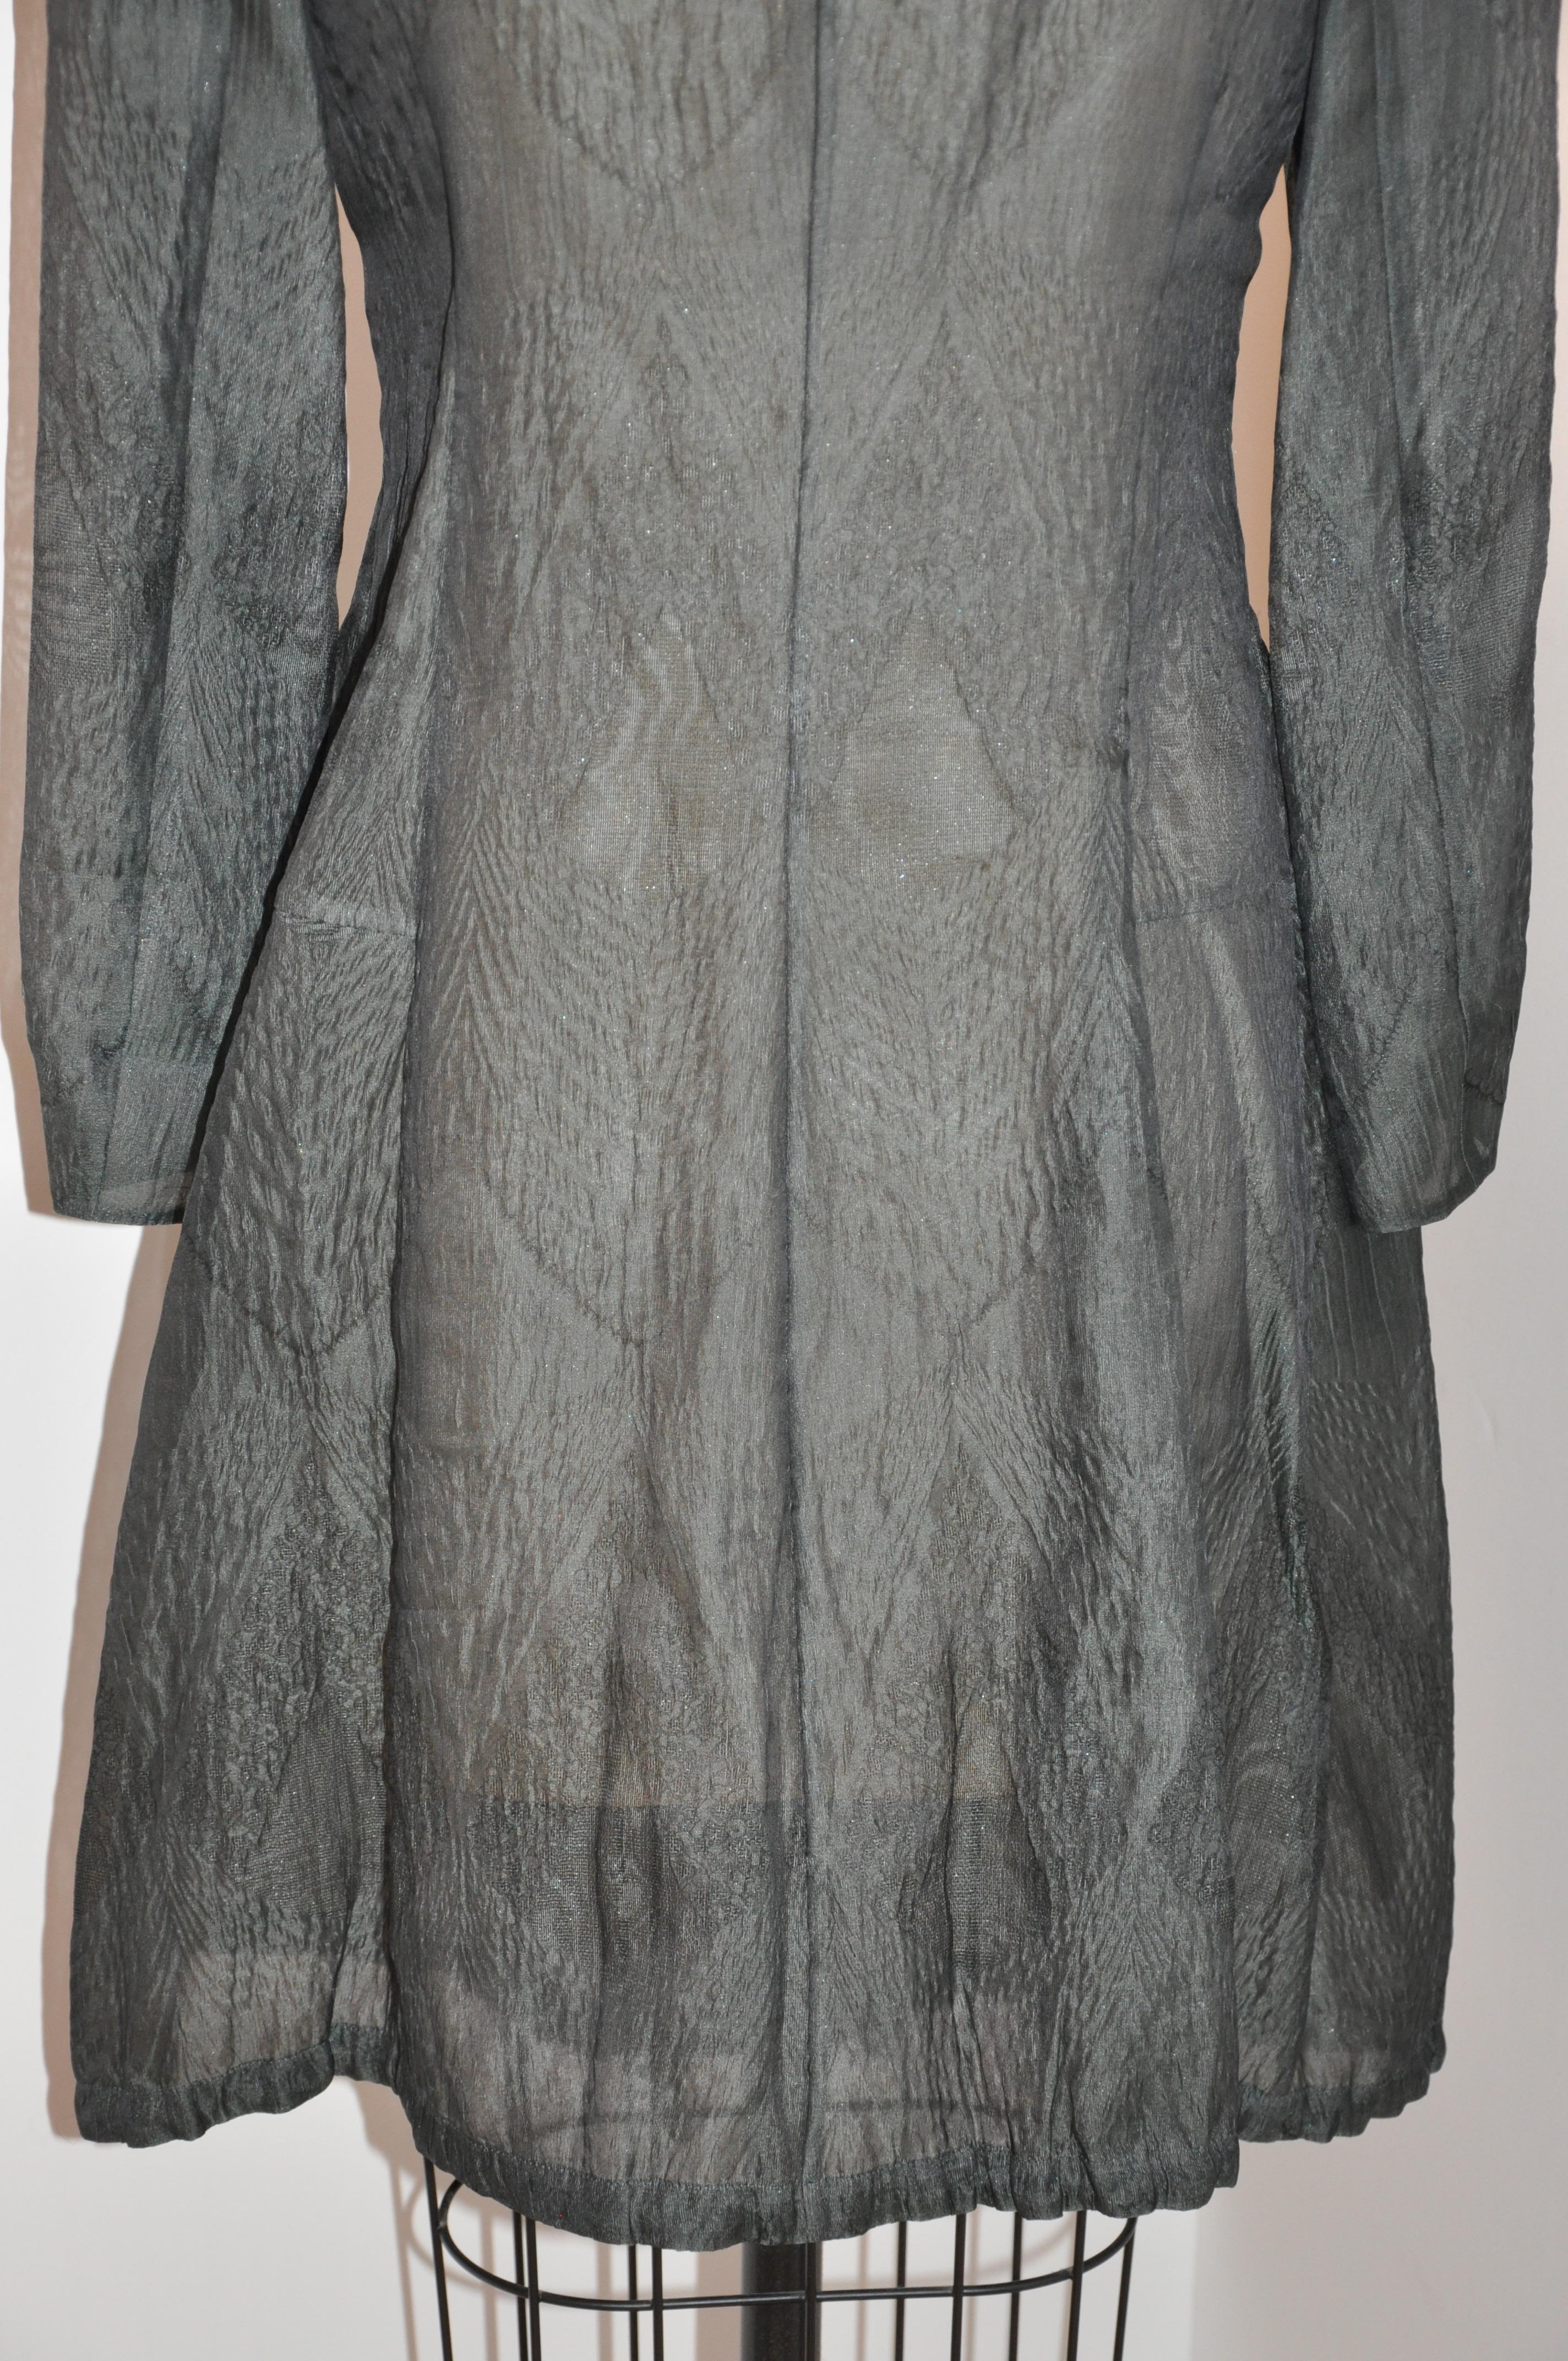 Georgio Armani 'Black Label' Forest-Green Silk Taffeta 2-Way Zippered Dress/Coat For Sale 5